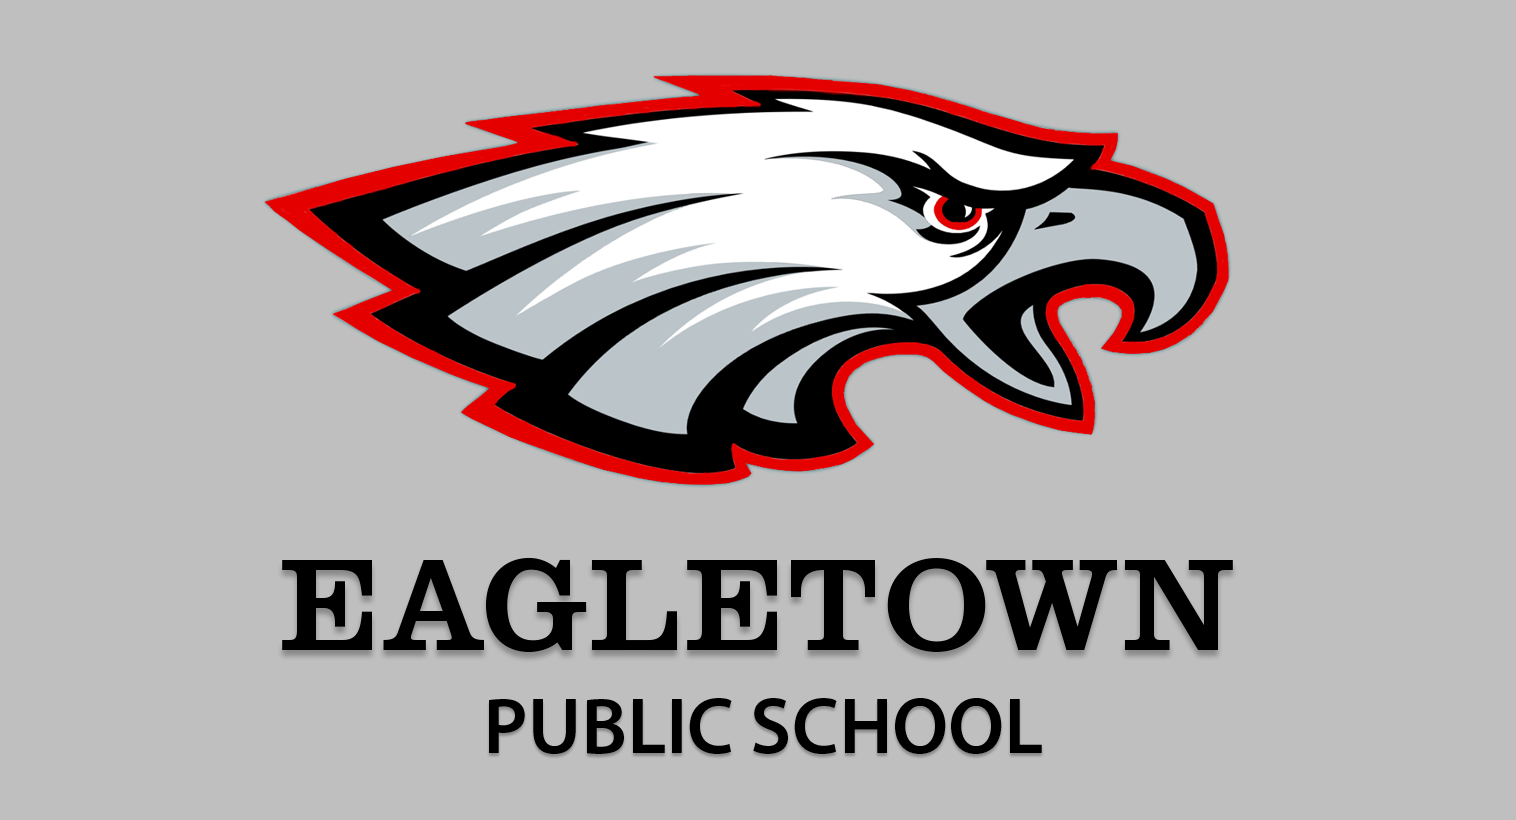 Eagletown Elementary School